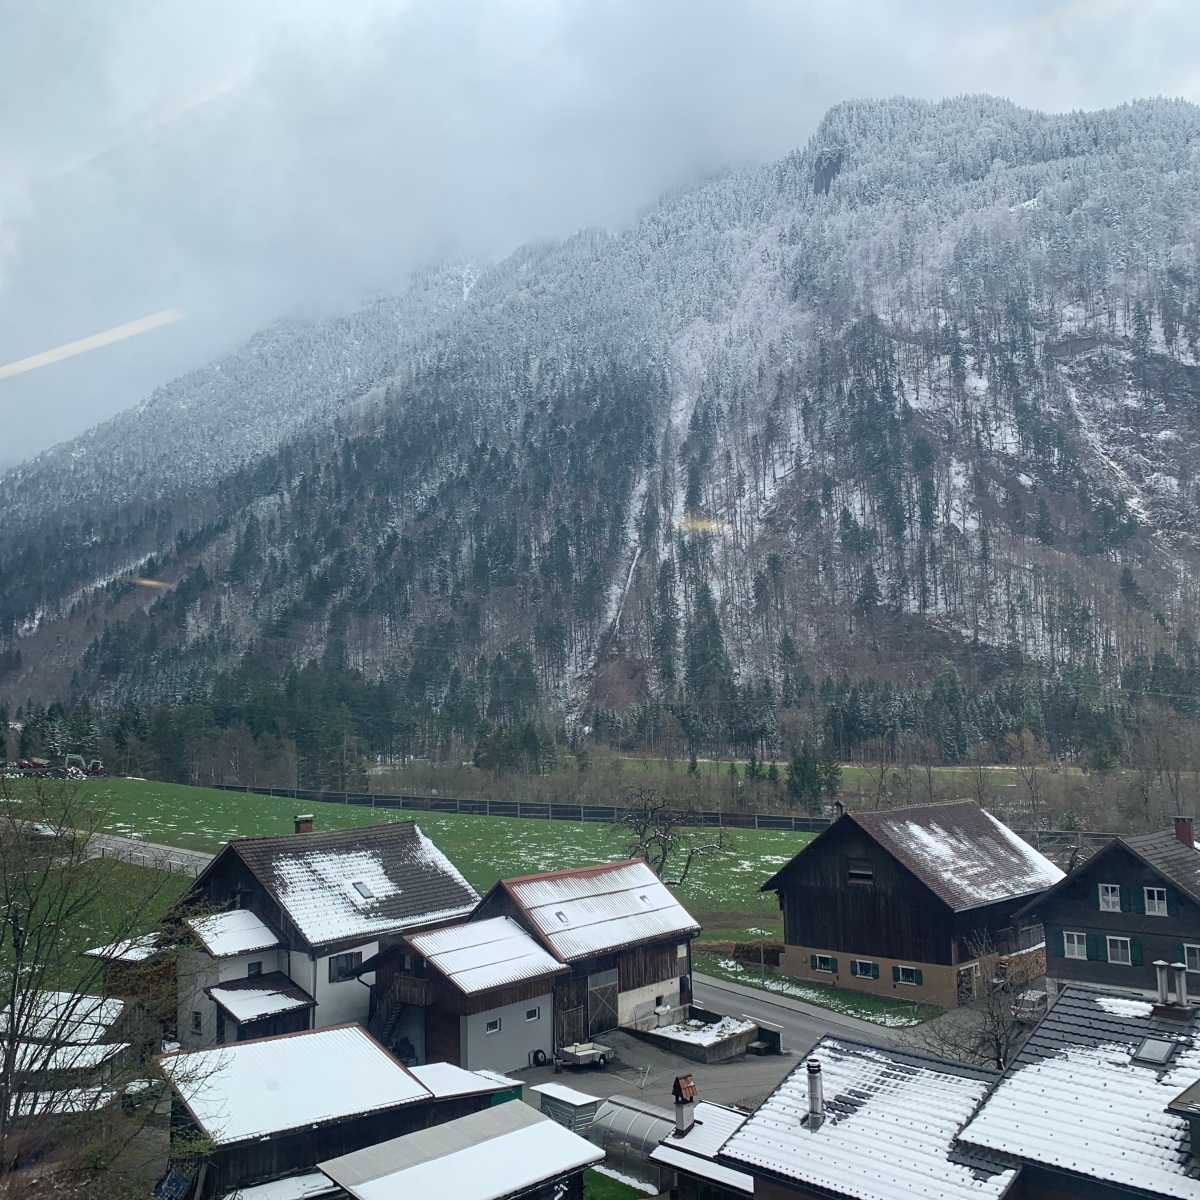 Train across the Alps 🗻 – Zürich 🇨🇭 to Vienna 🇦🇹 via the scenic Arlberg Pass